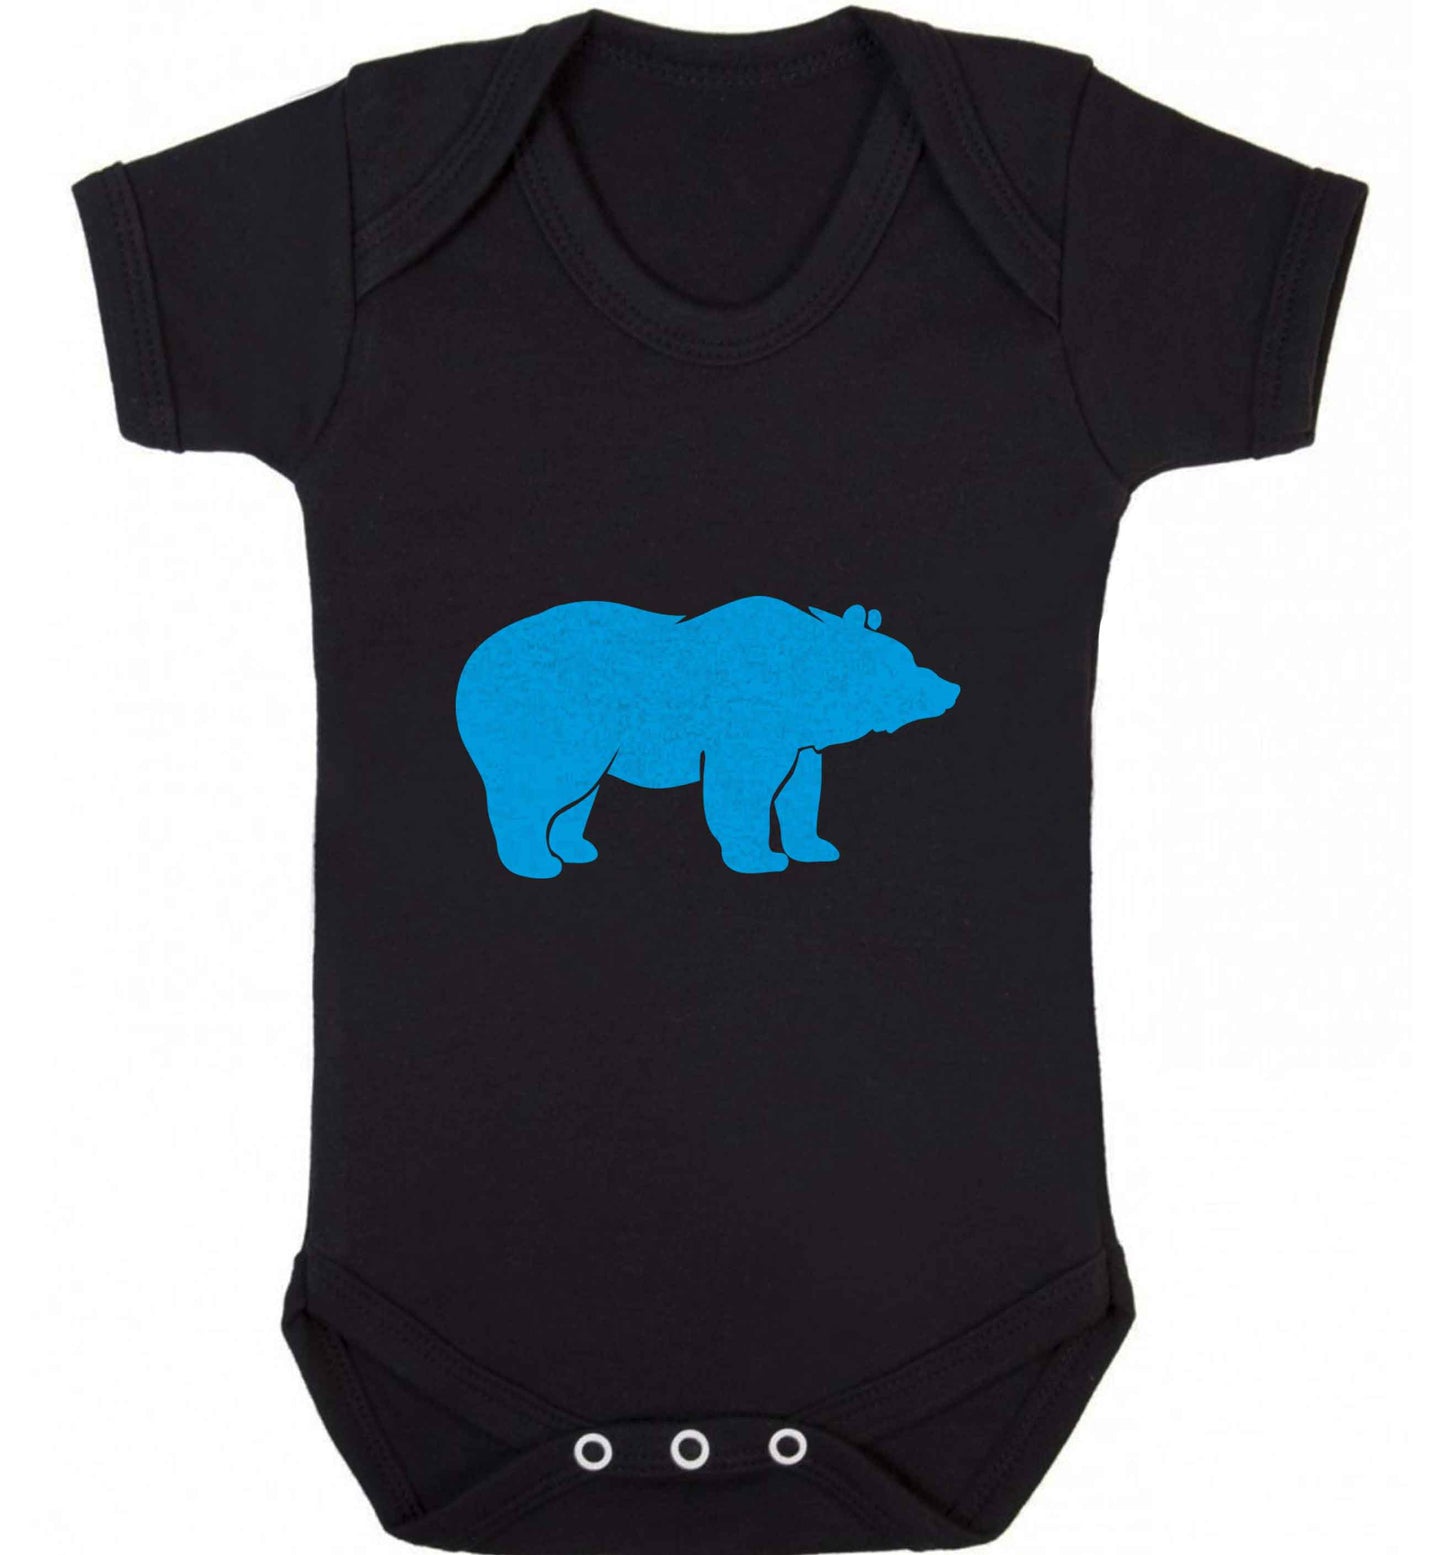 Blue bear baby vest black 18-24 months